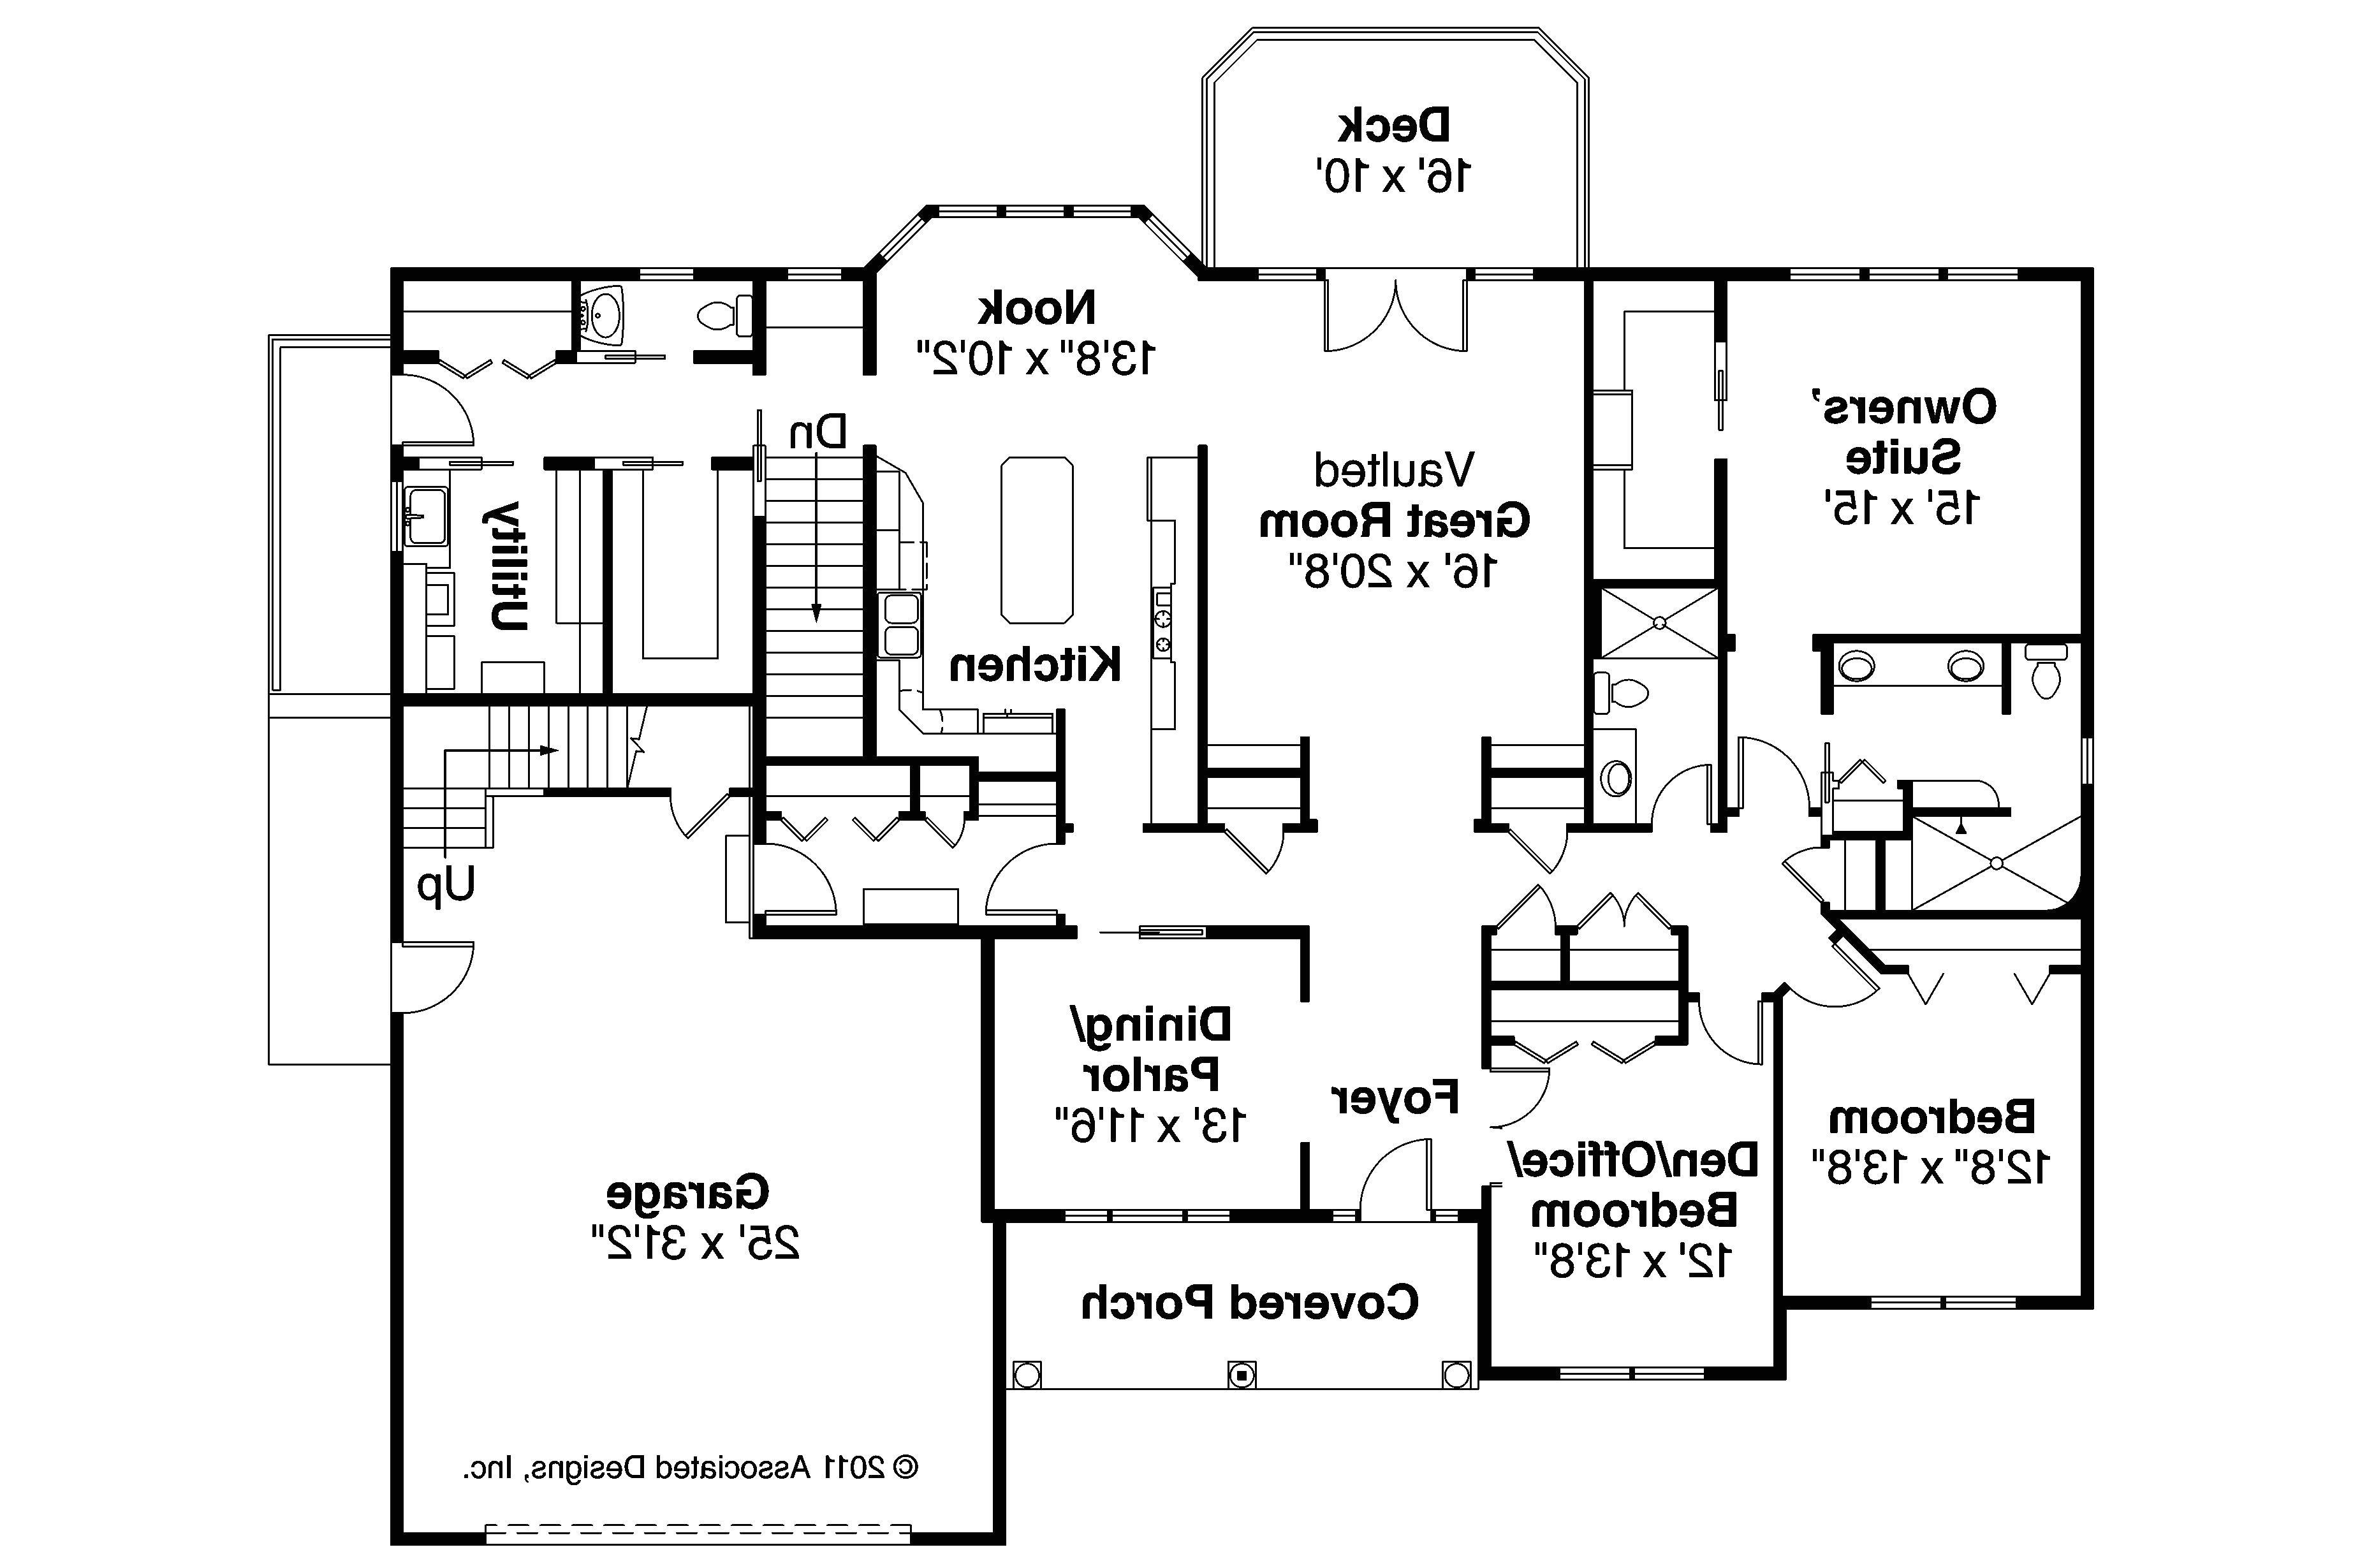 duran homes floor plans unique 24 luxury university library floor plan